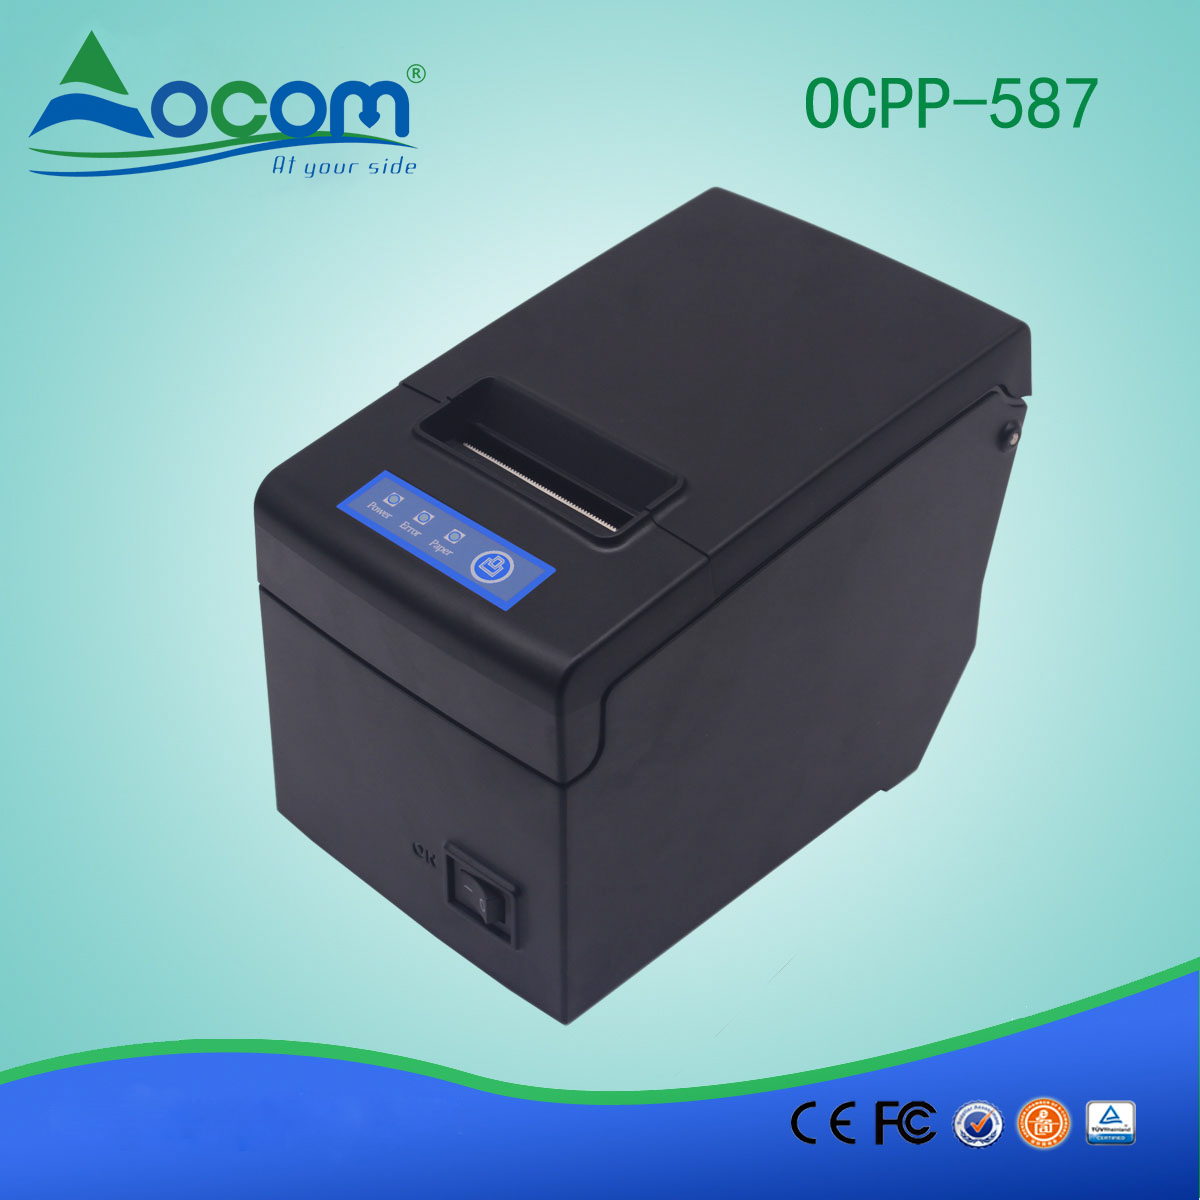 Impresora térmica de recibos de 58 mm OCPP-587-R RS232 / COM / Puerto serie